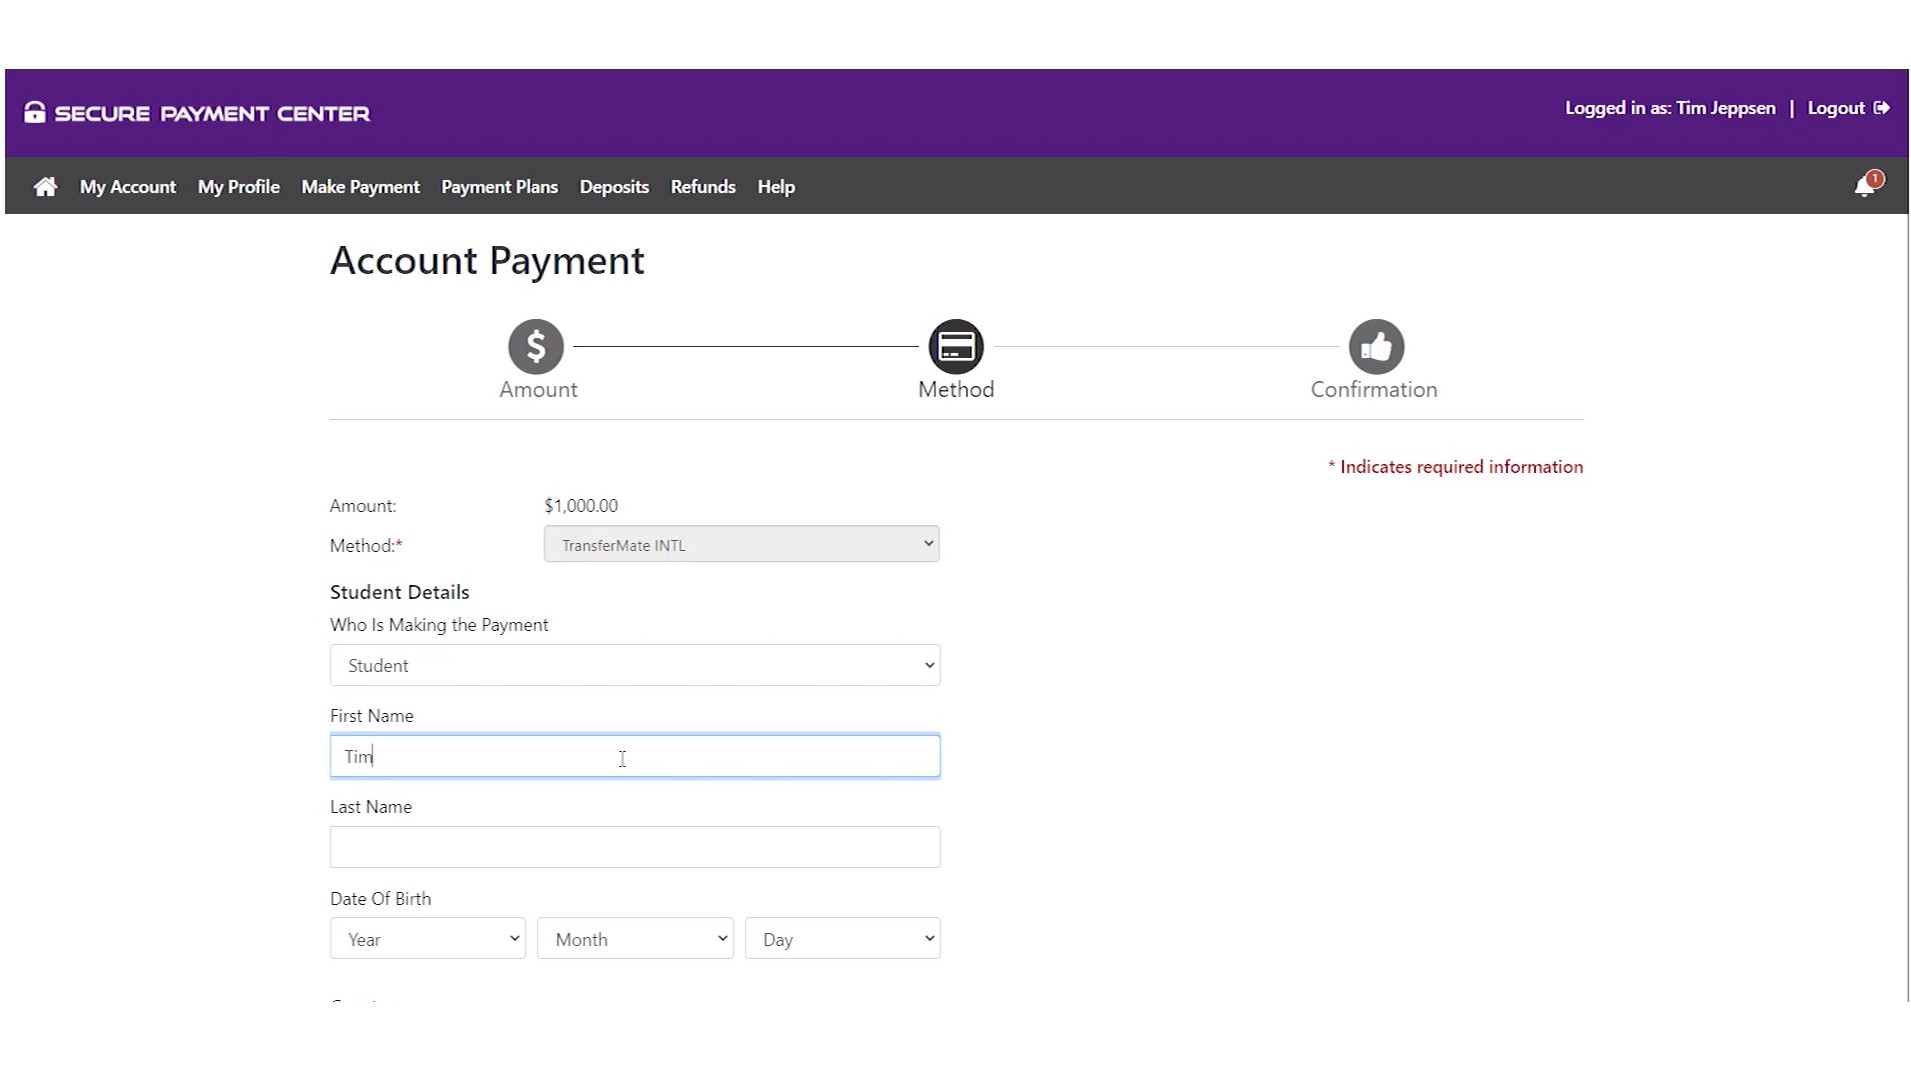 TransferMate: Enter Payer Information